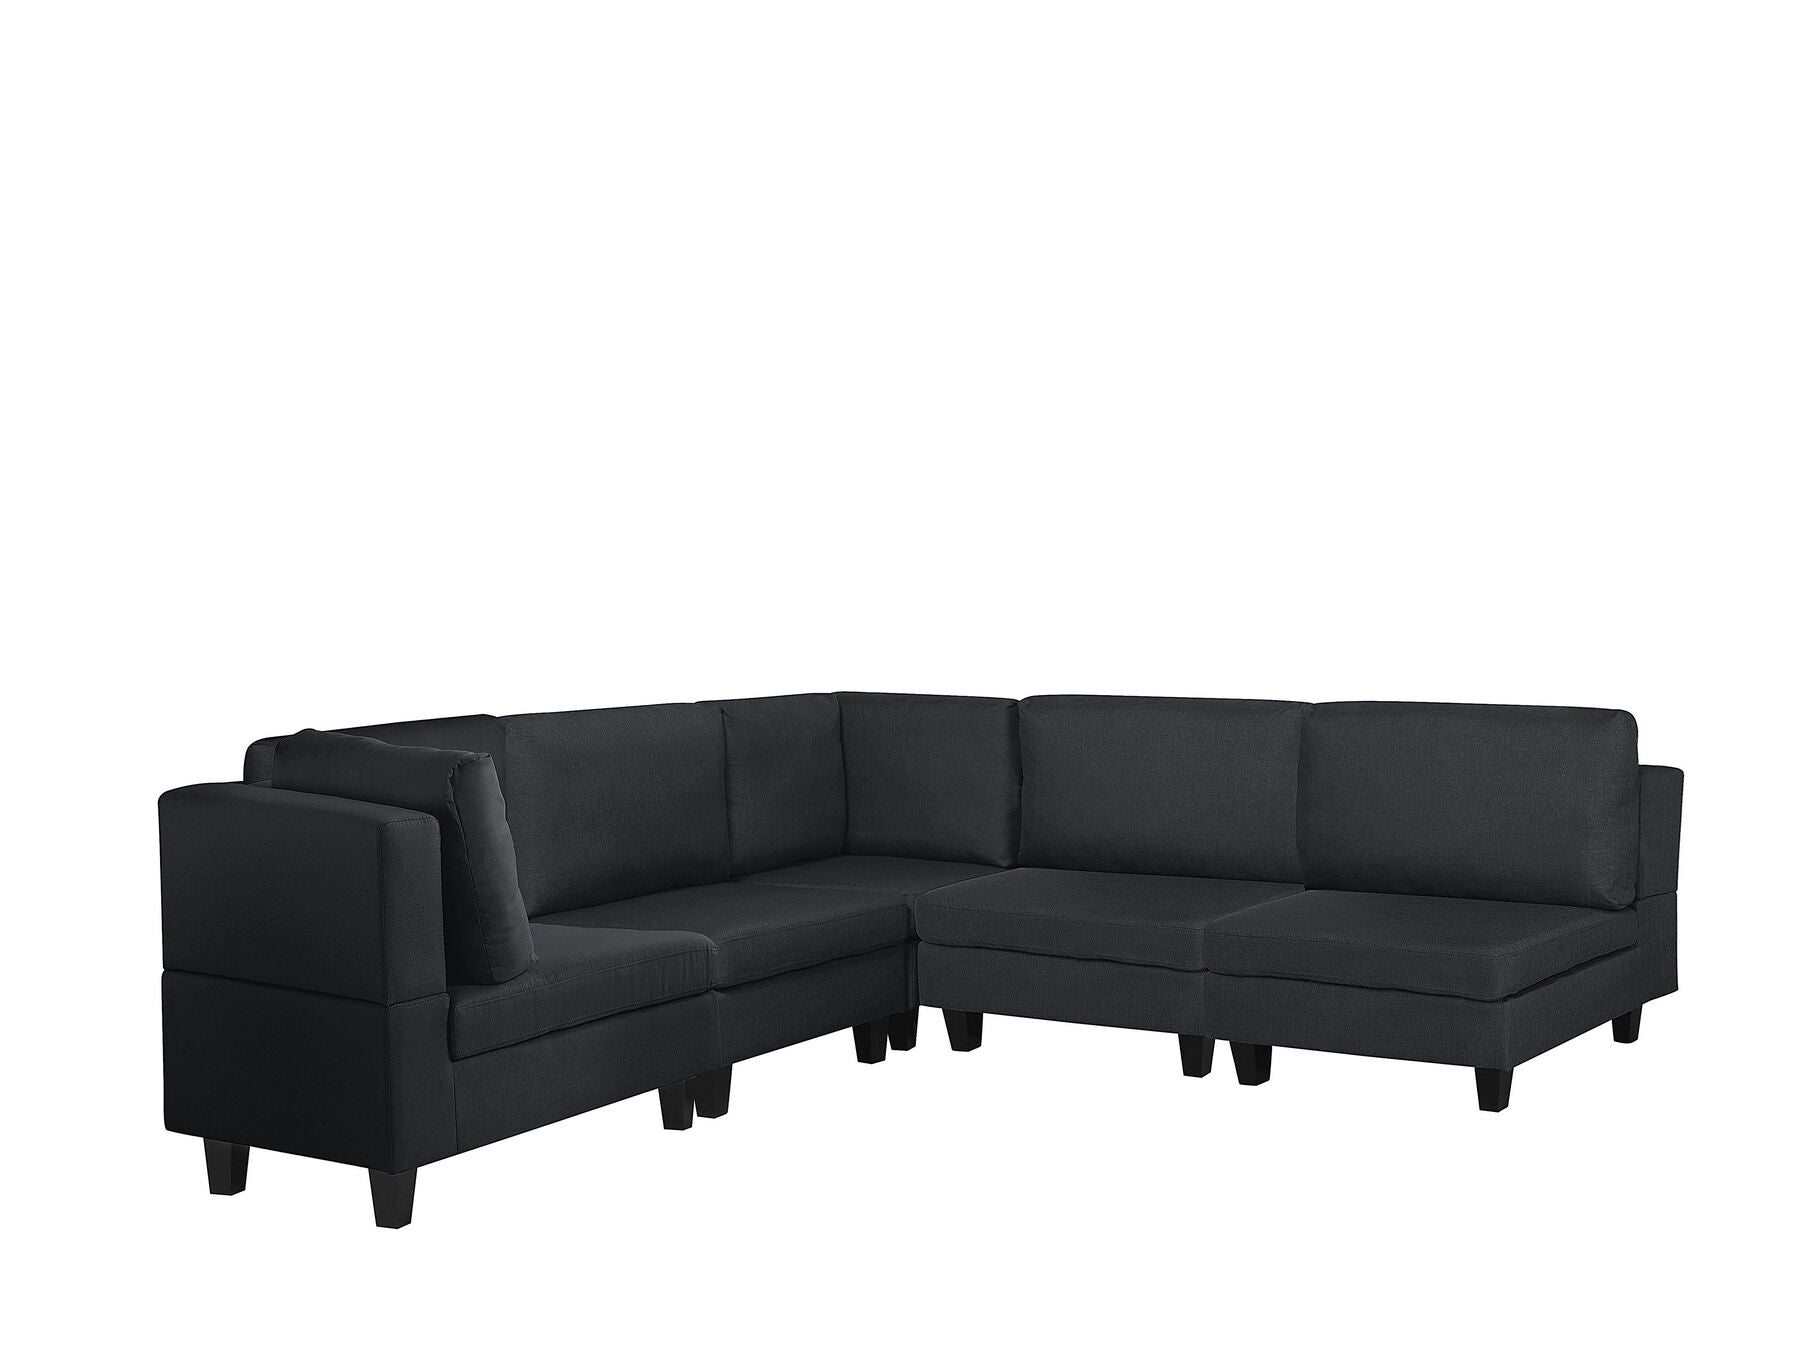 Fevik 5 Seater Modular Fabric Corner Sofa with Ottoman